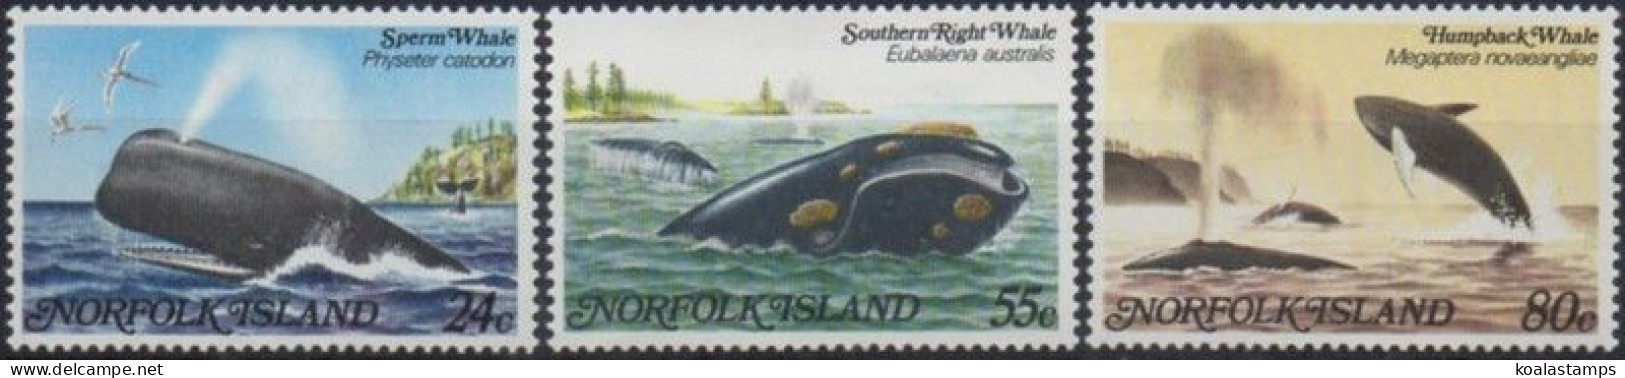 Norfolk Island 1982 SG284-286 Whales Set MNH - Norfolk Island